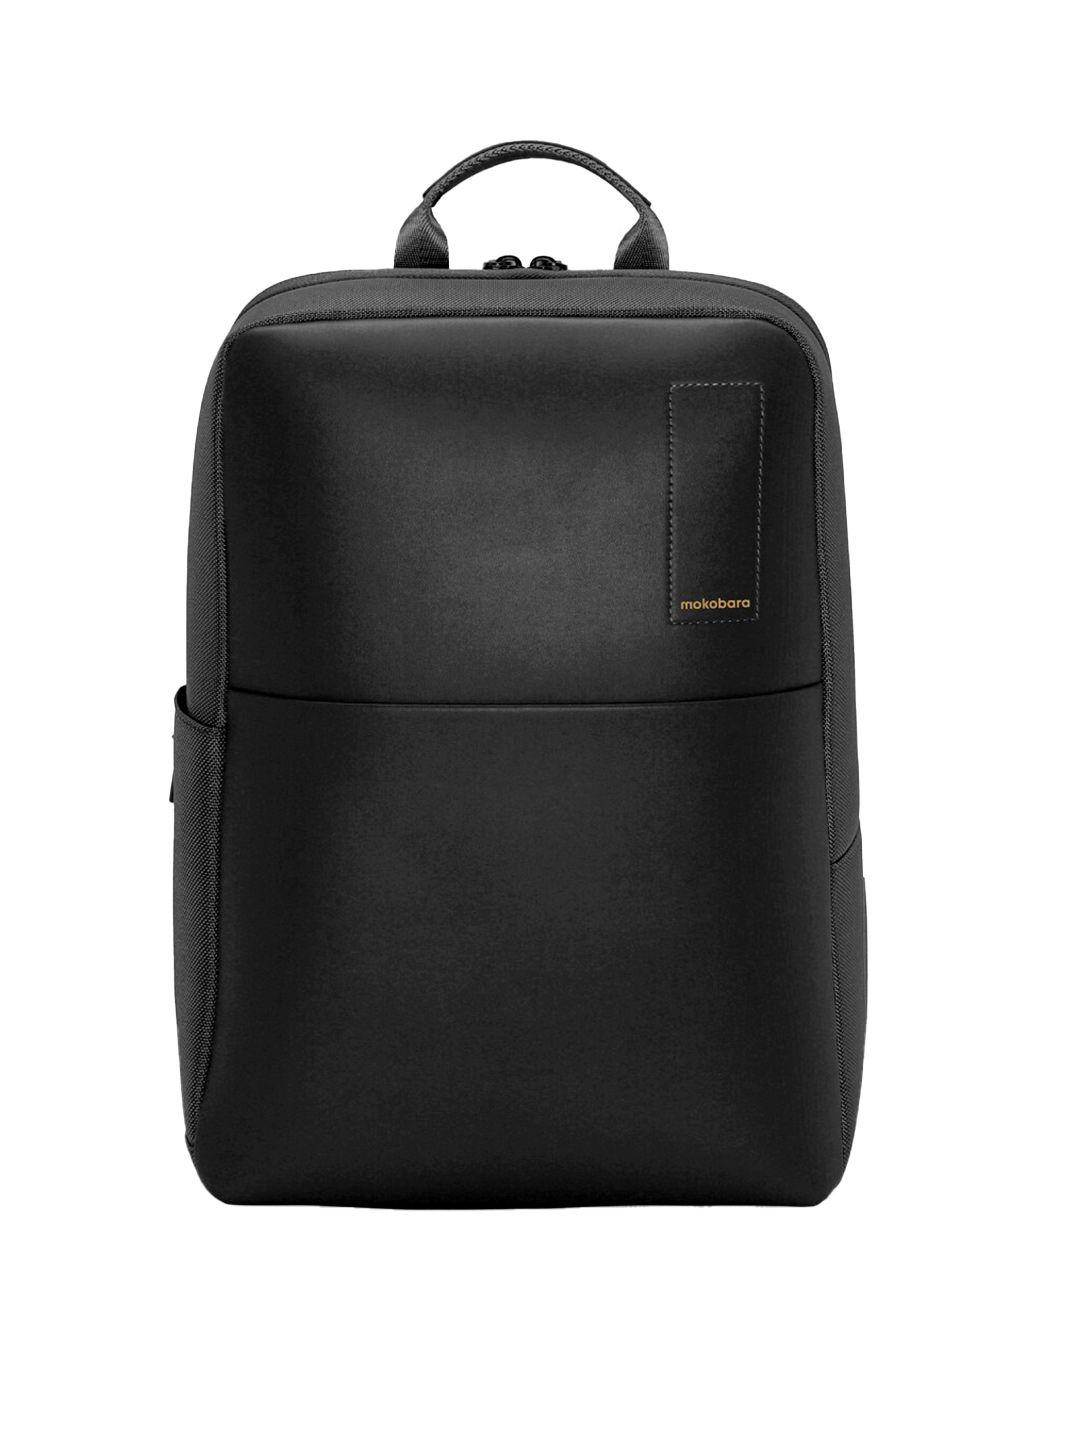 mokobara unisex black backpack